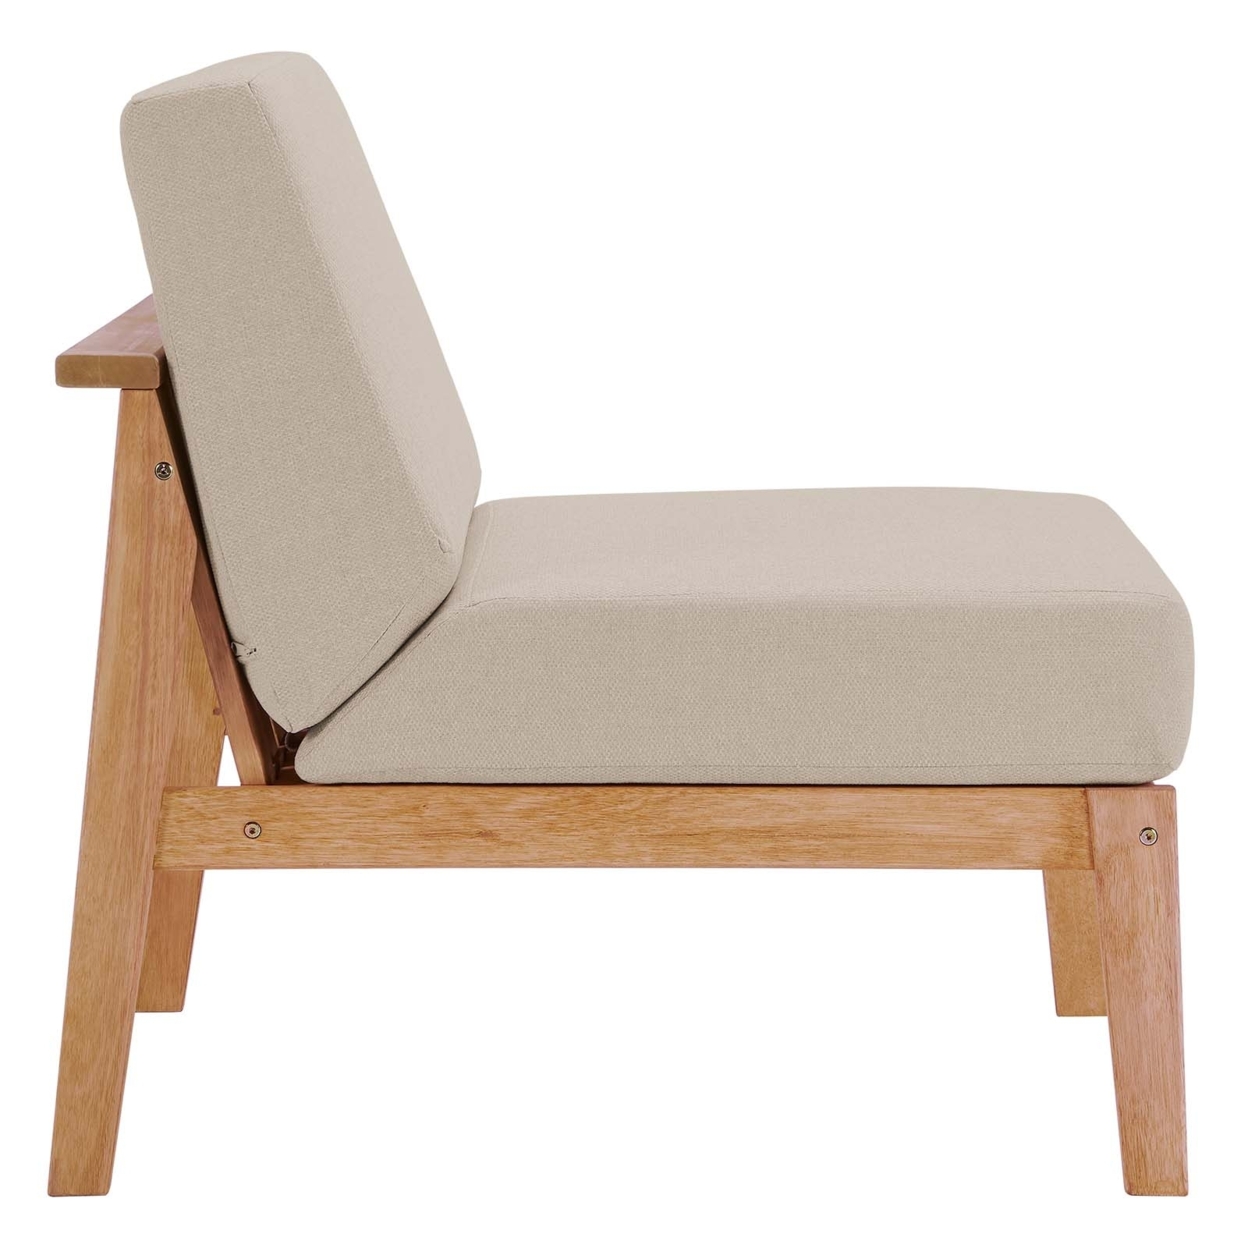 Sedona Outdoor Patio Eucalyptus Wood Sectional Sofa Armless Chair, Natural Taupe